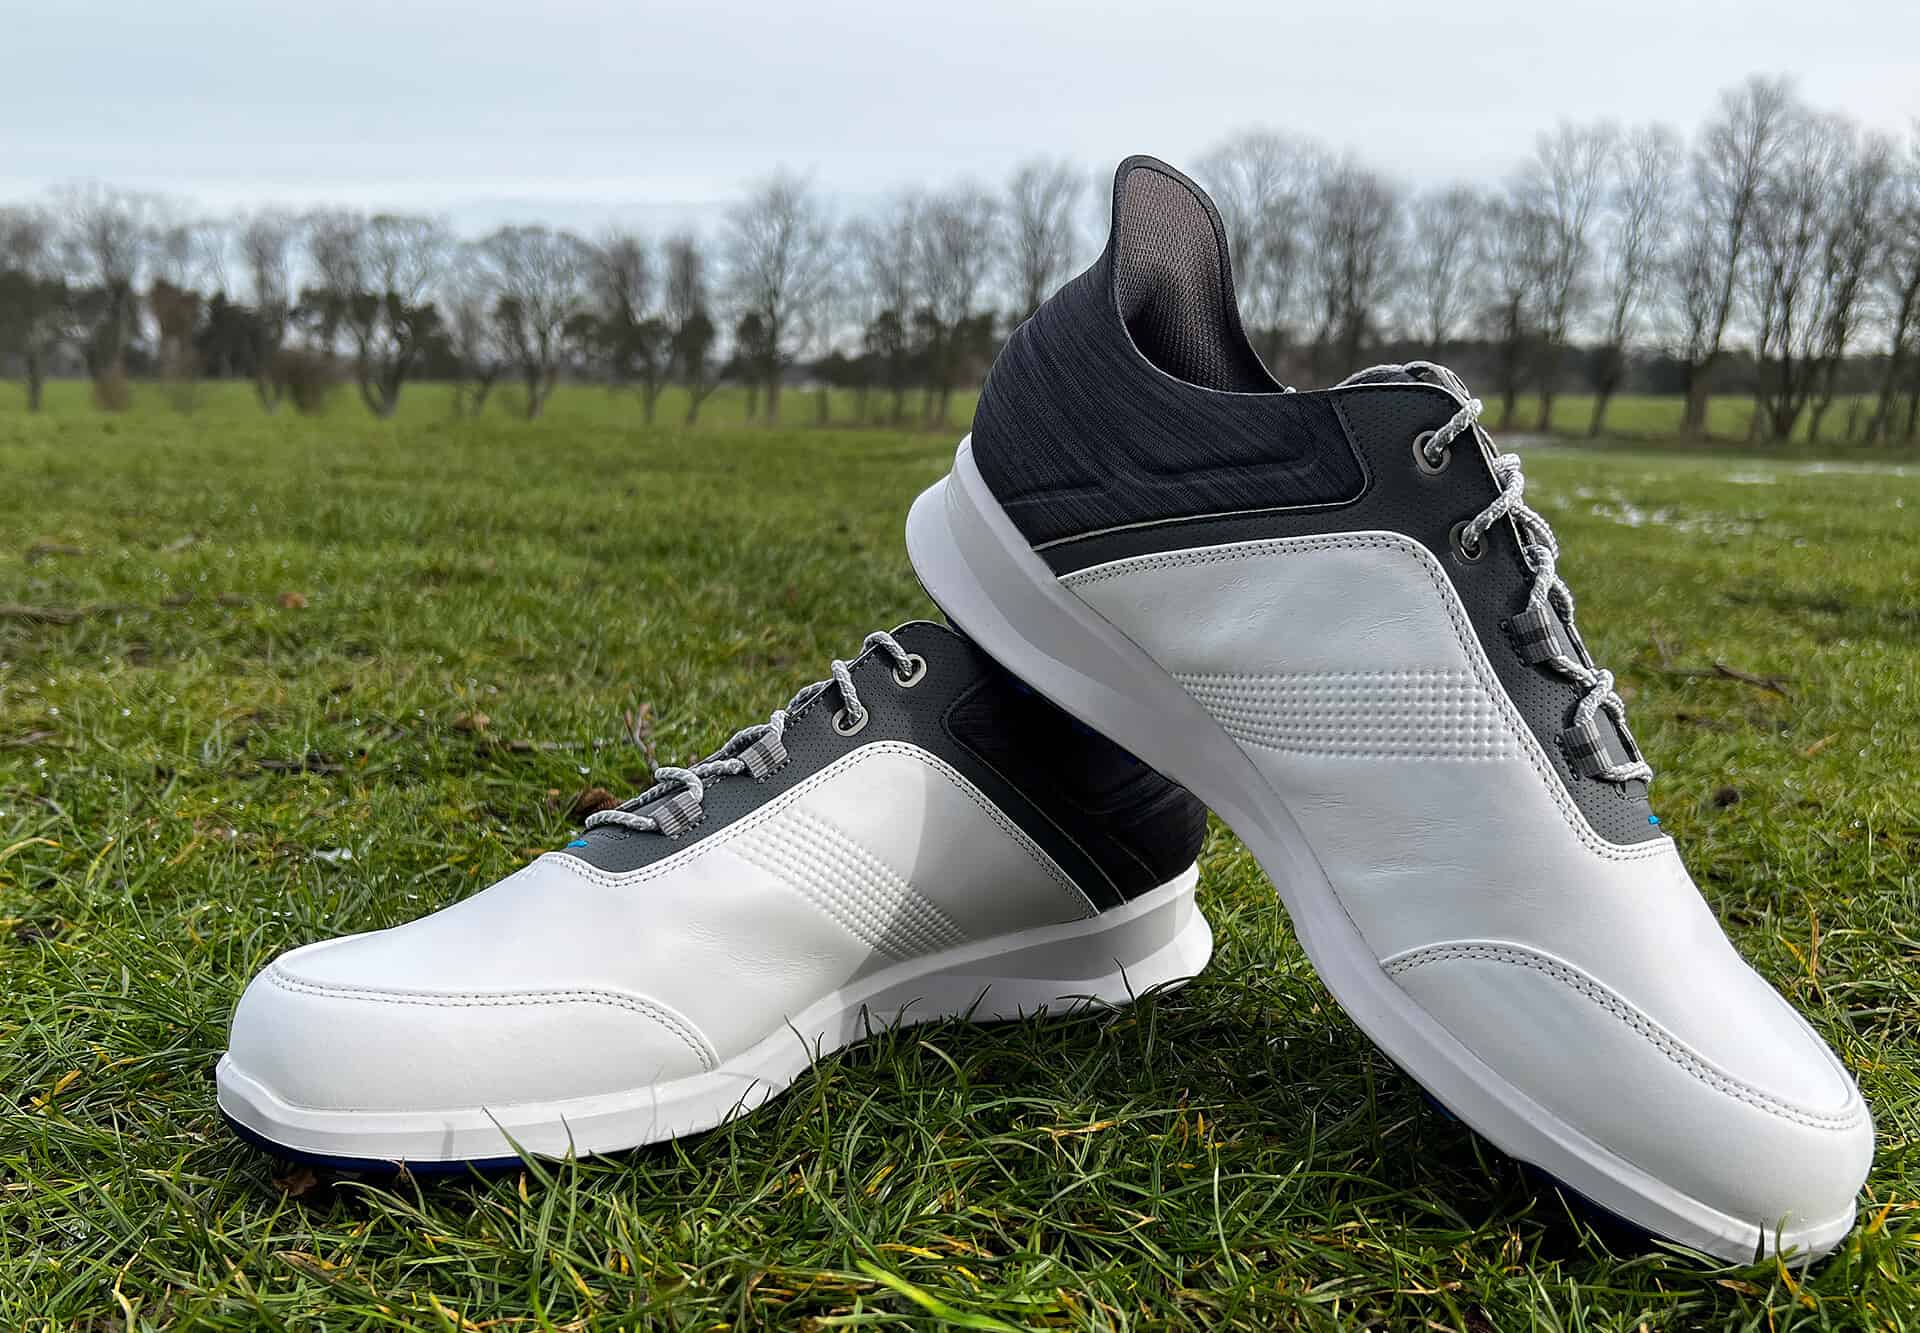 Under Armour unveil Charged Phantom SL golf shoe